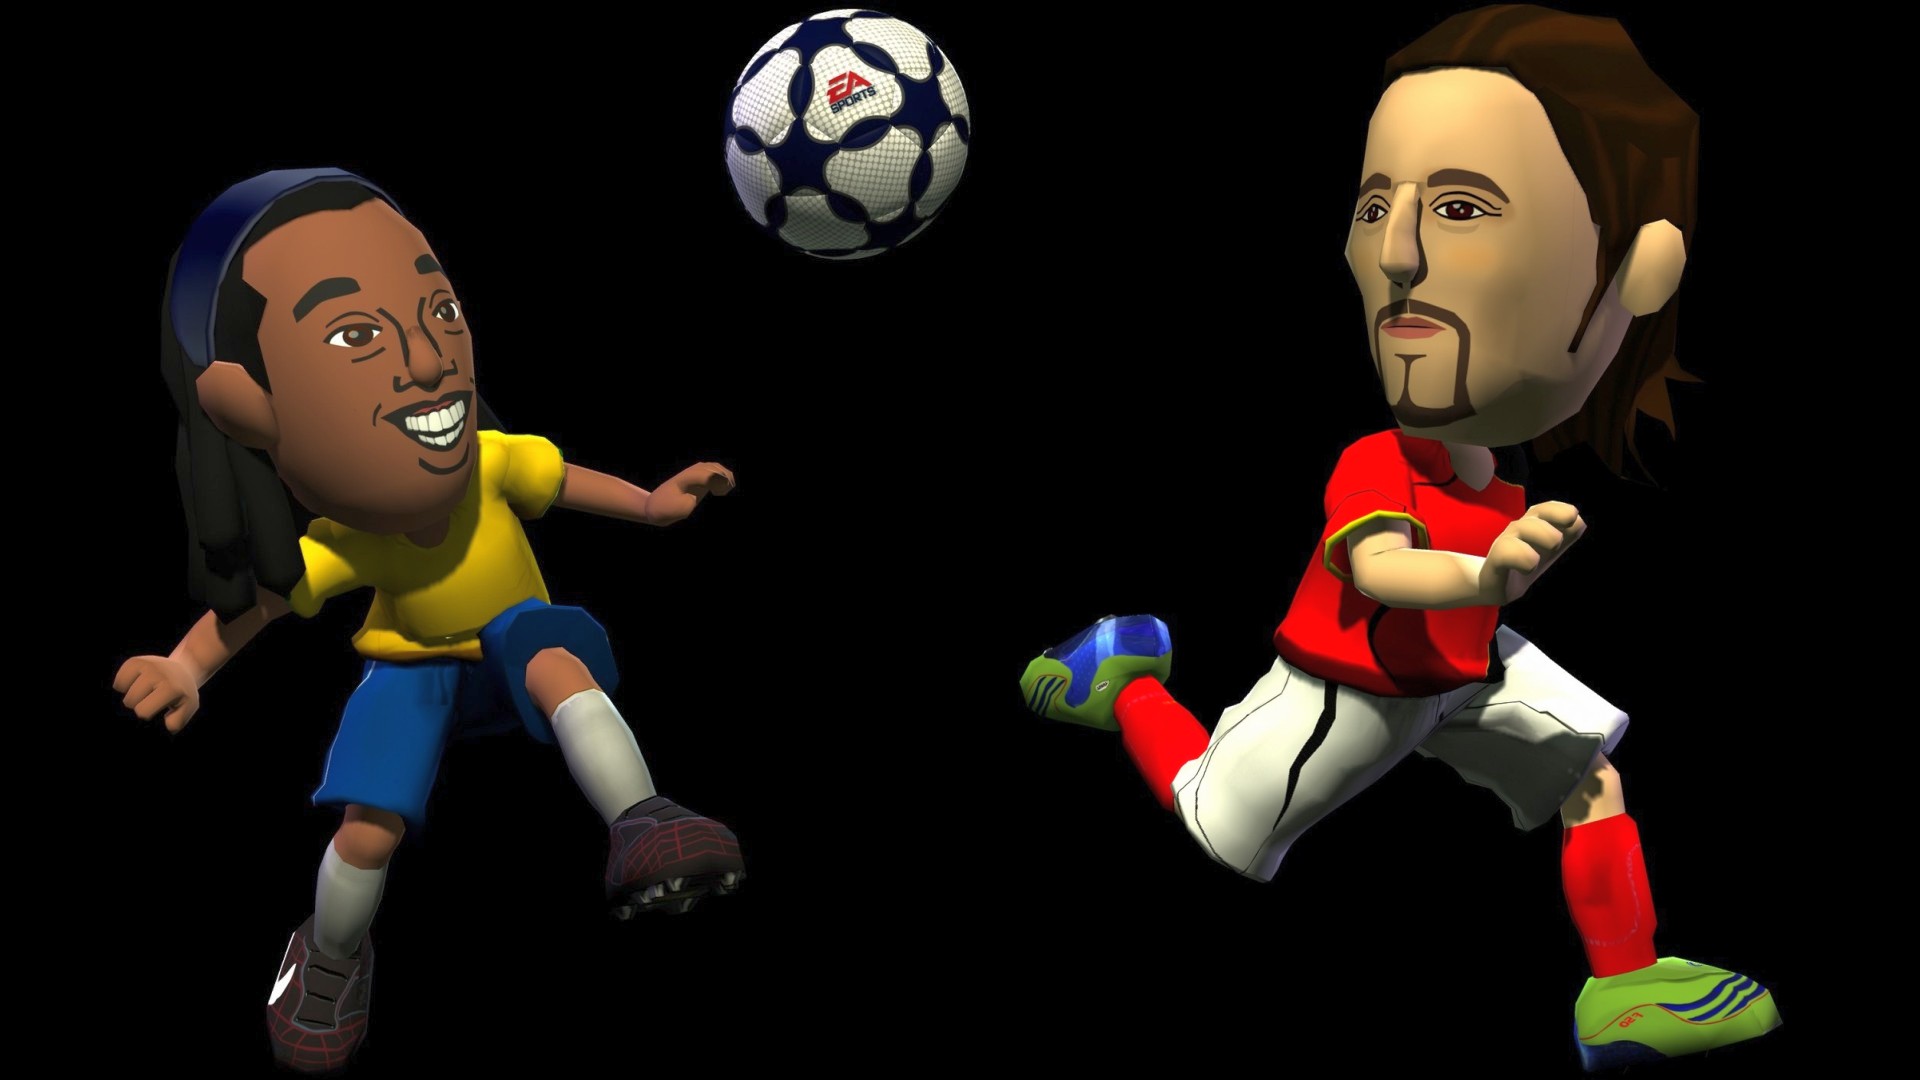 FIFA 09 - Download